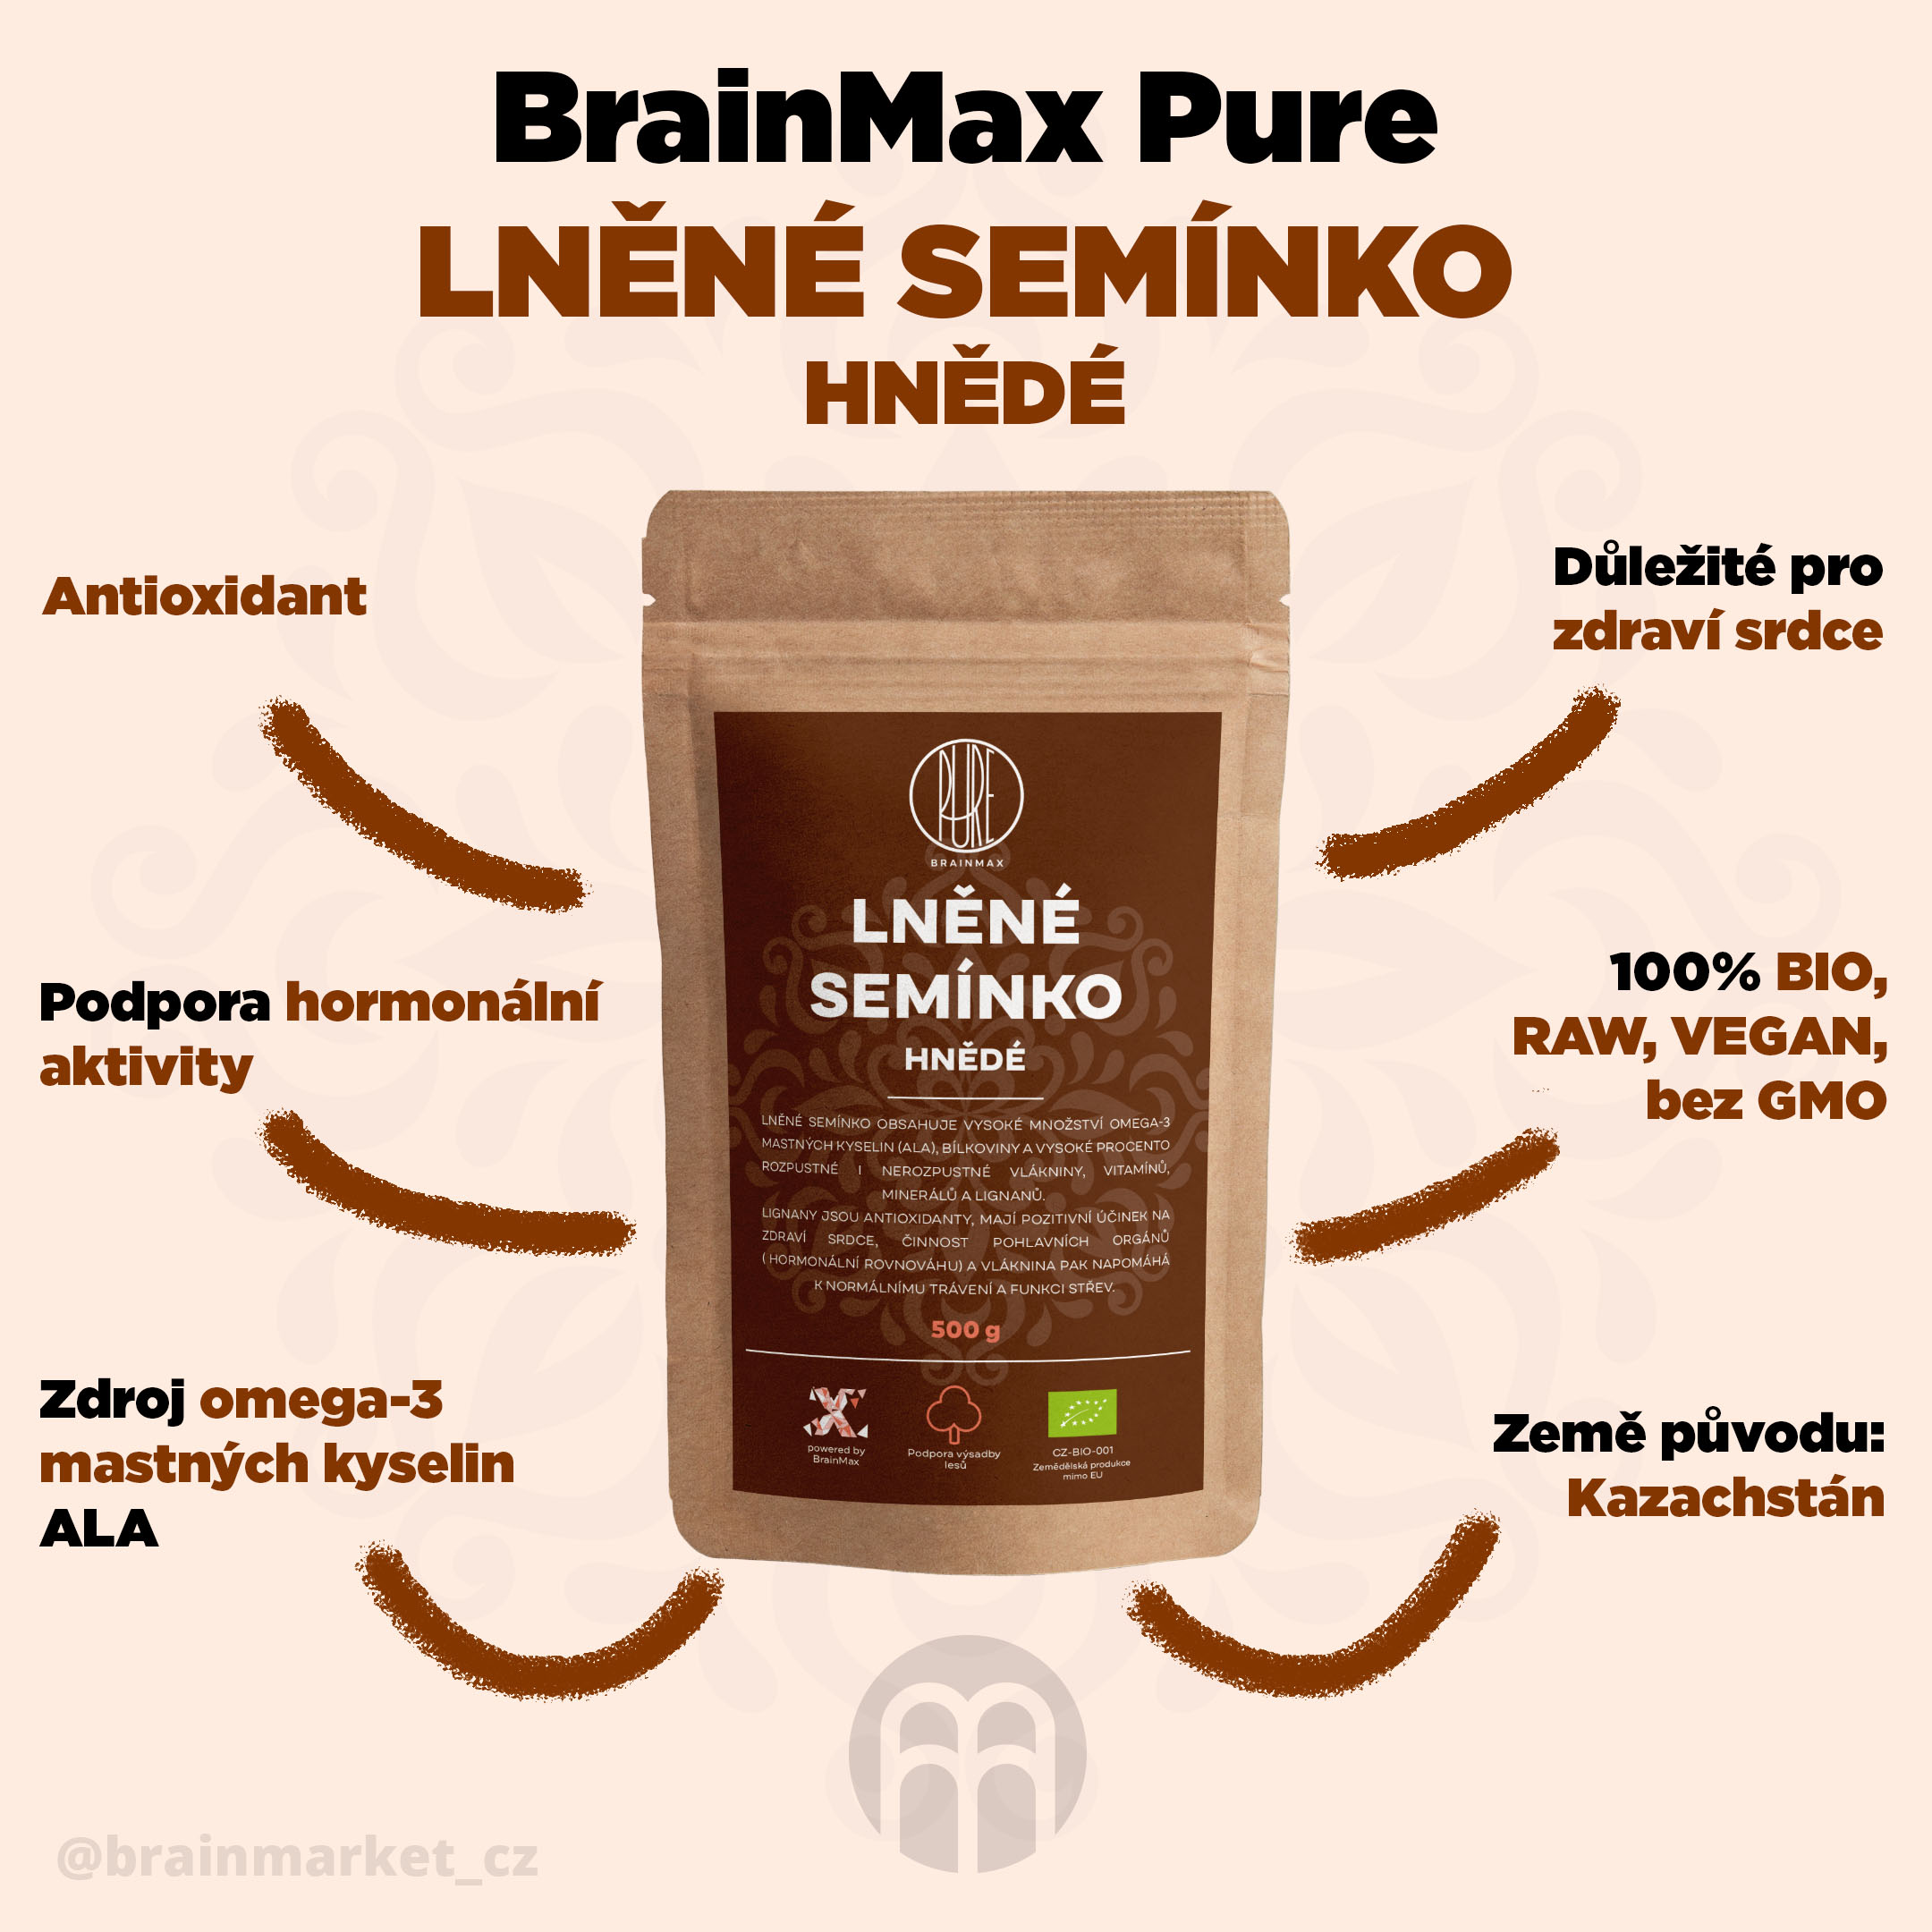 BrainMax Pure Lněné semínko (hnědé) BIO, 500 g